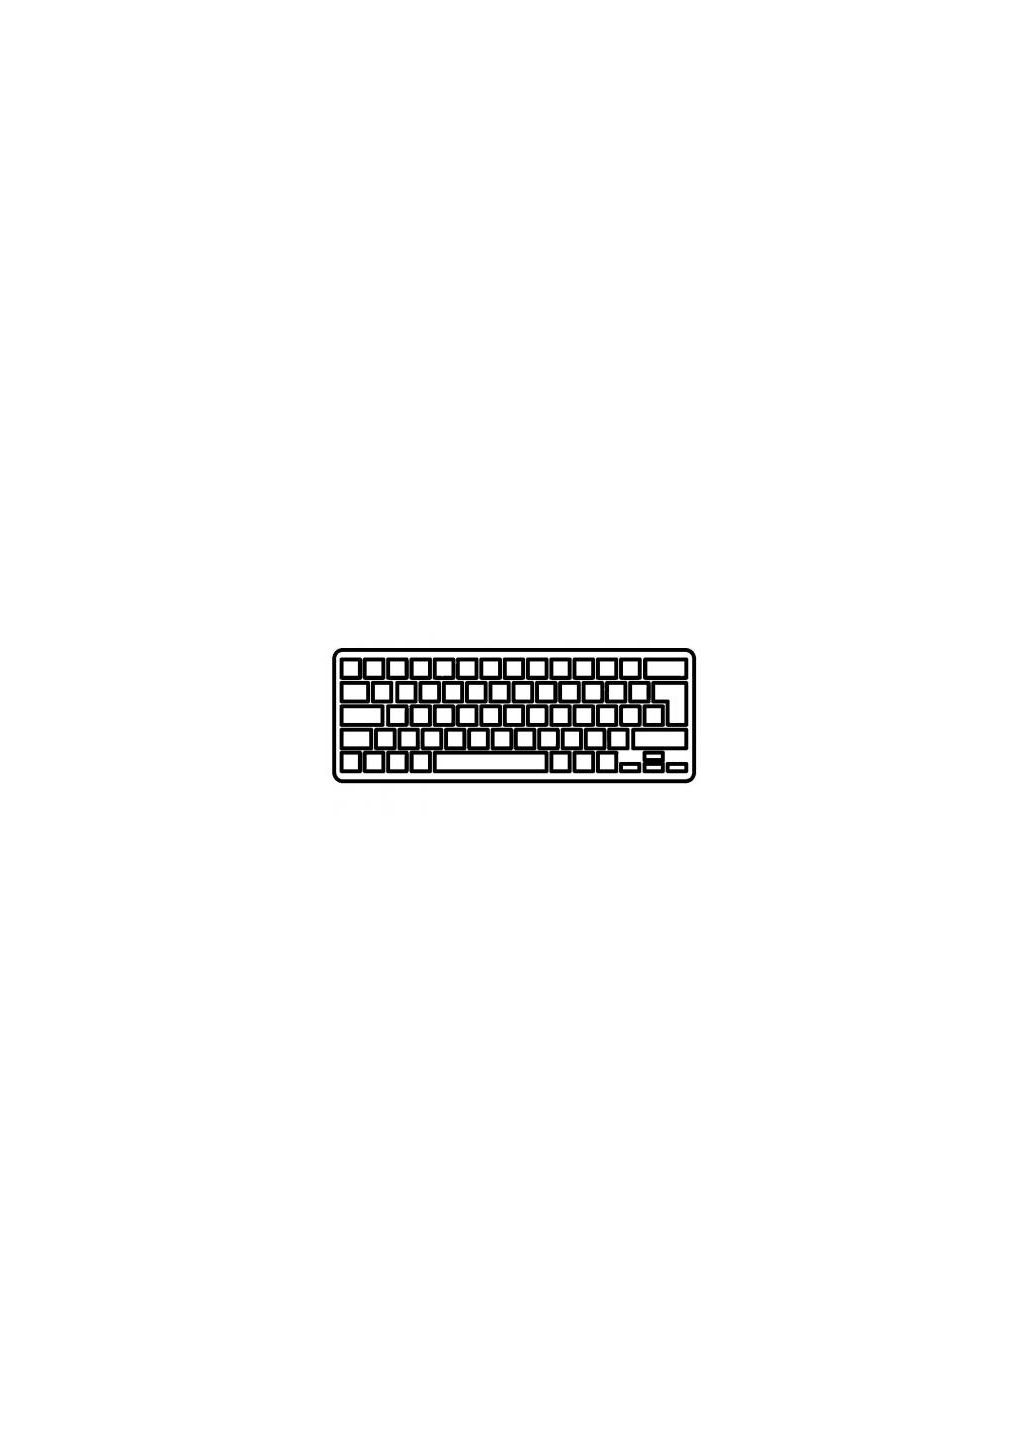 Клавиатура для ноутбука (A43348) Toshiba satellite a200/a300/m200/m300/l300 series серая ua (276707424)